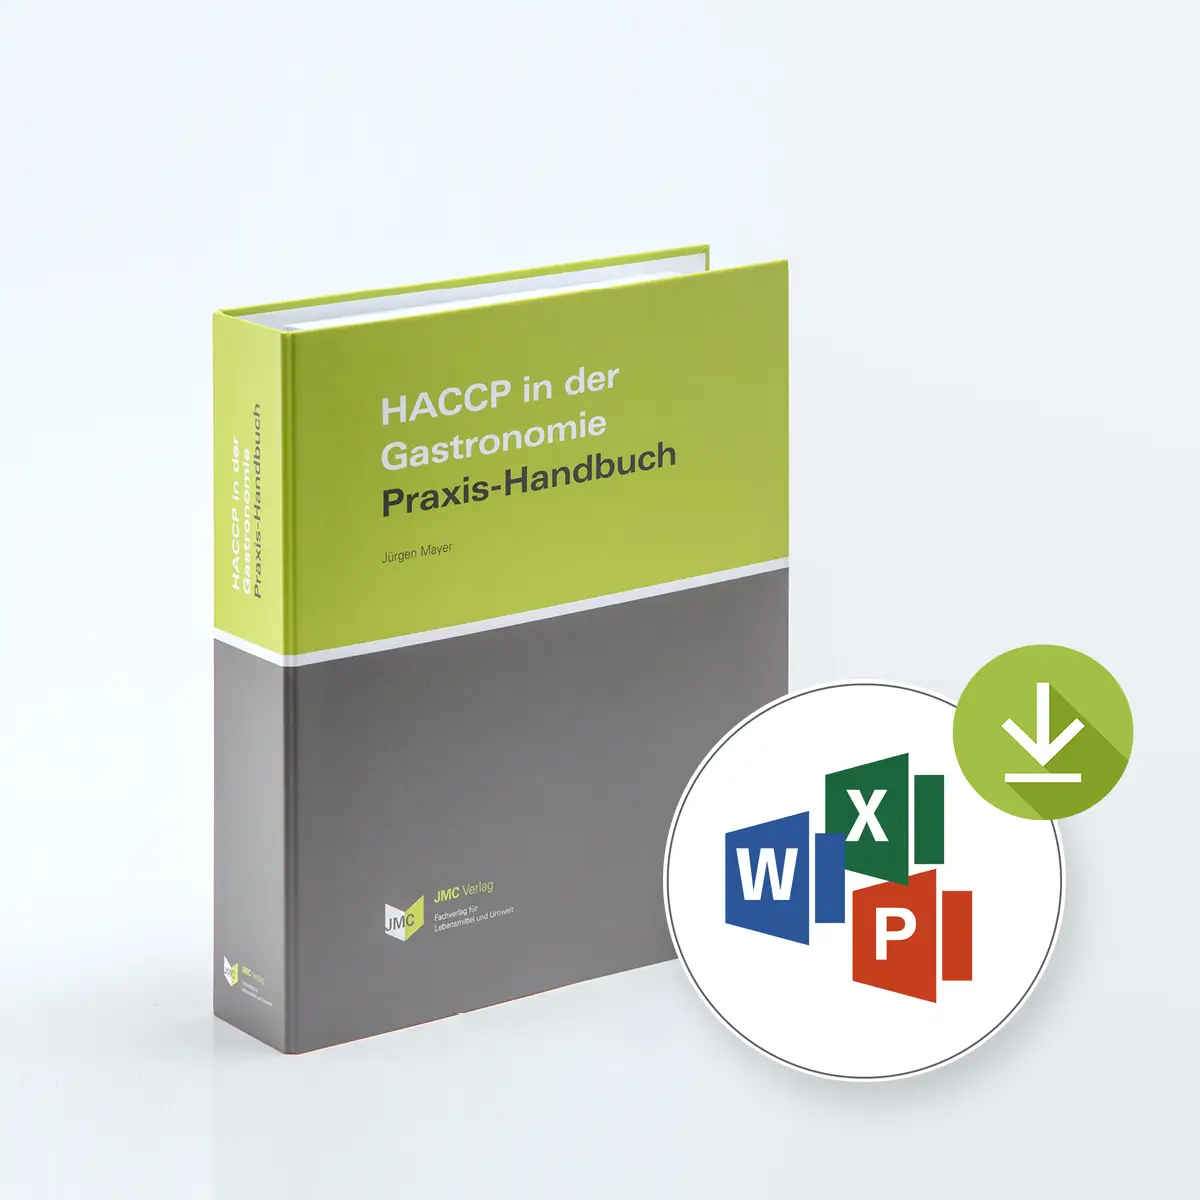 HACCP in der Gastronomie plus Downloads